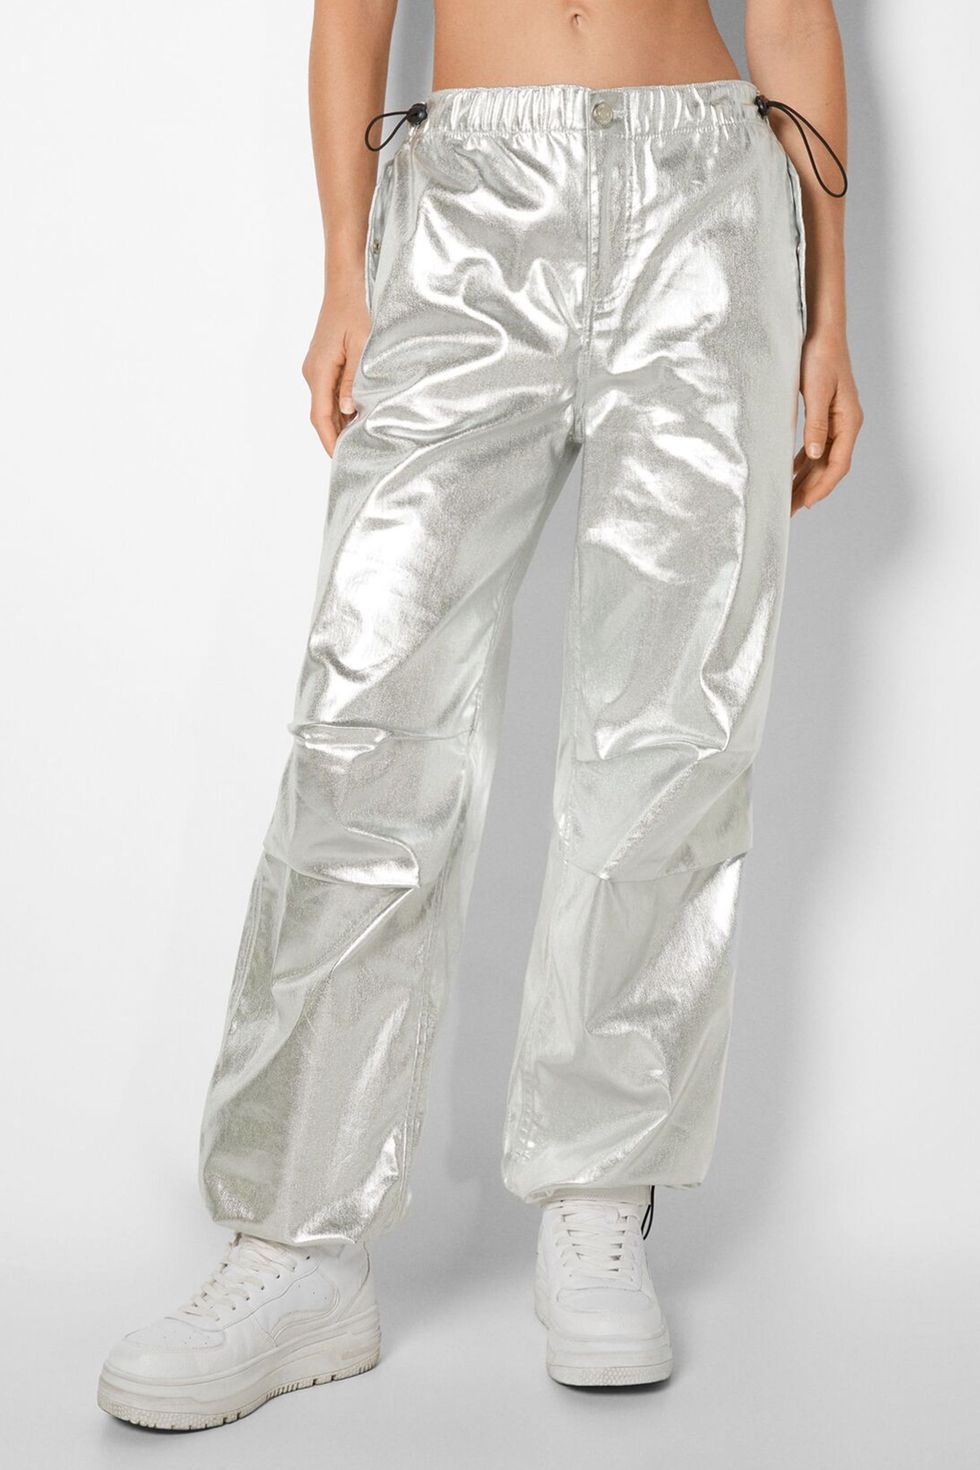 YOOTIKO Parachute Pants for Women Metallic Pants Silver Y2K High